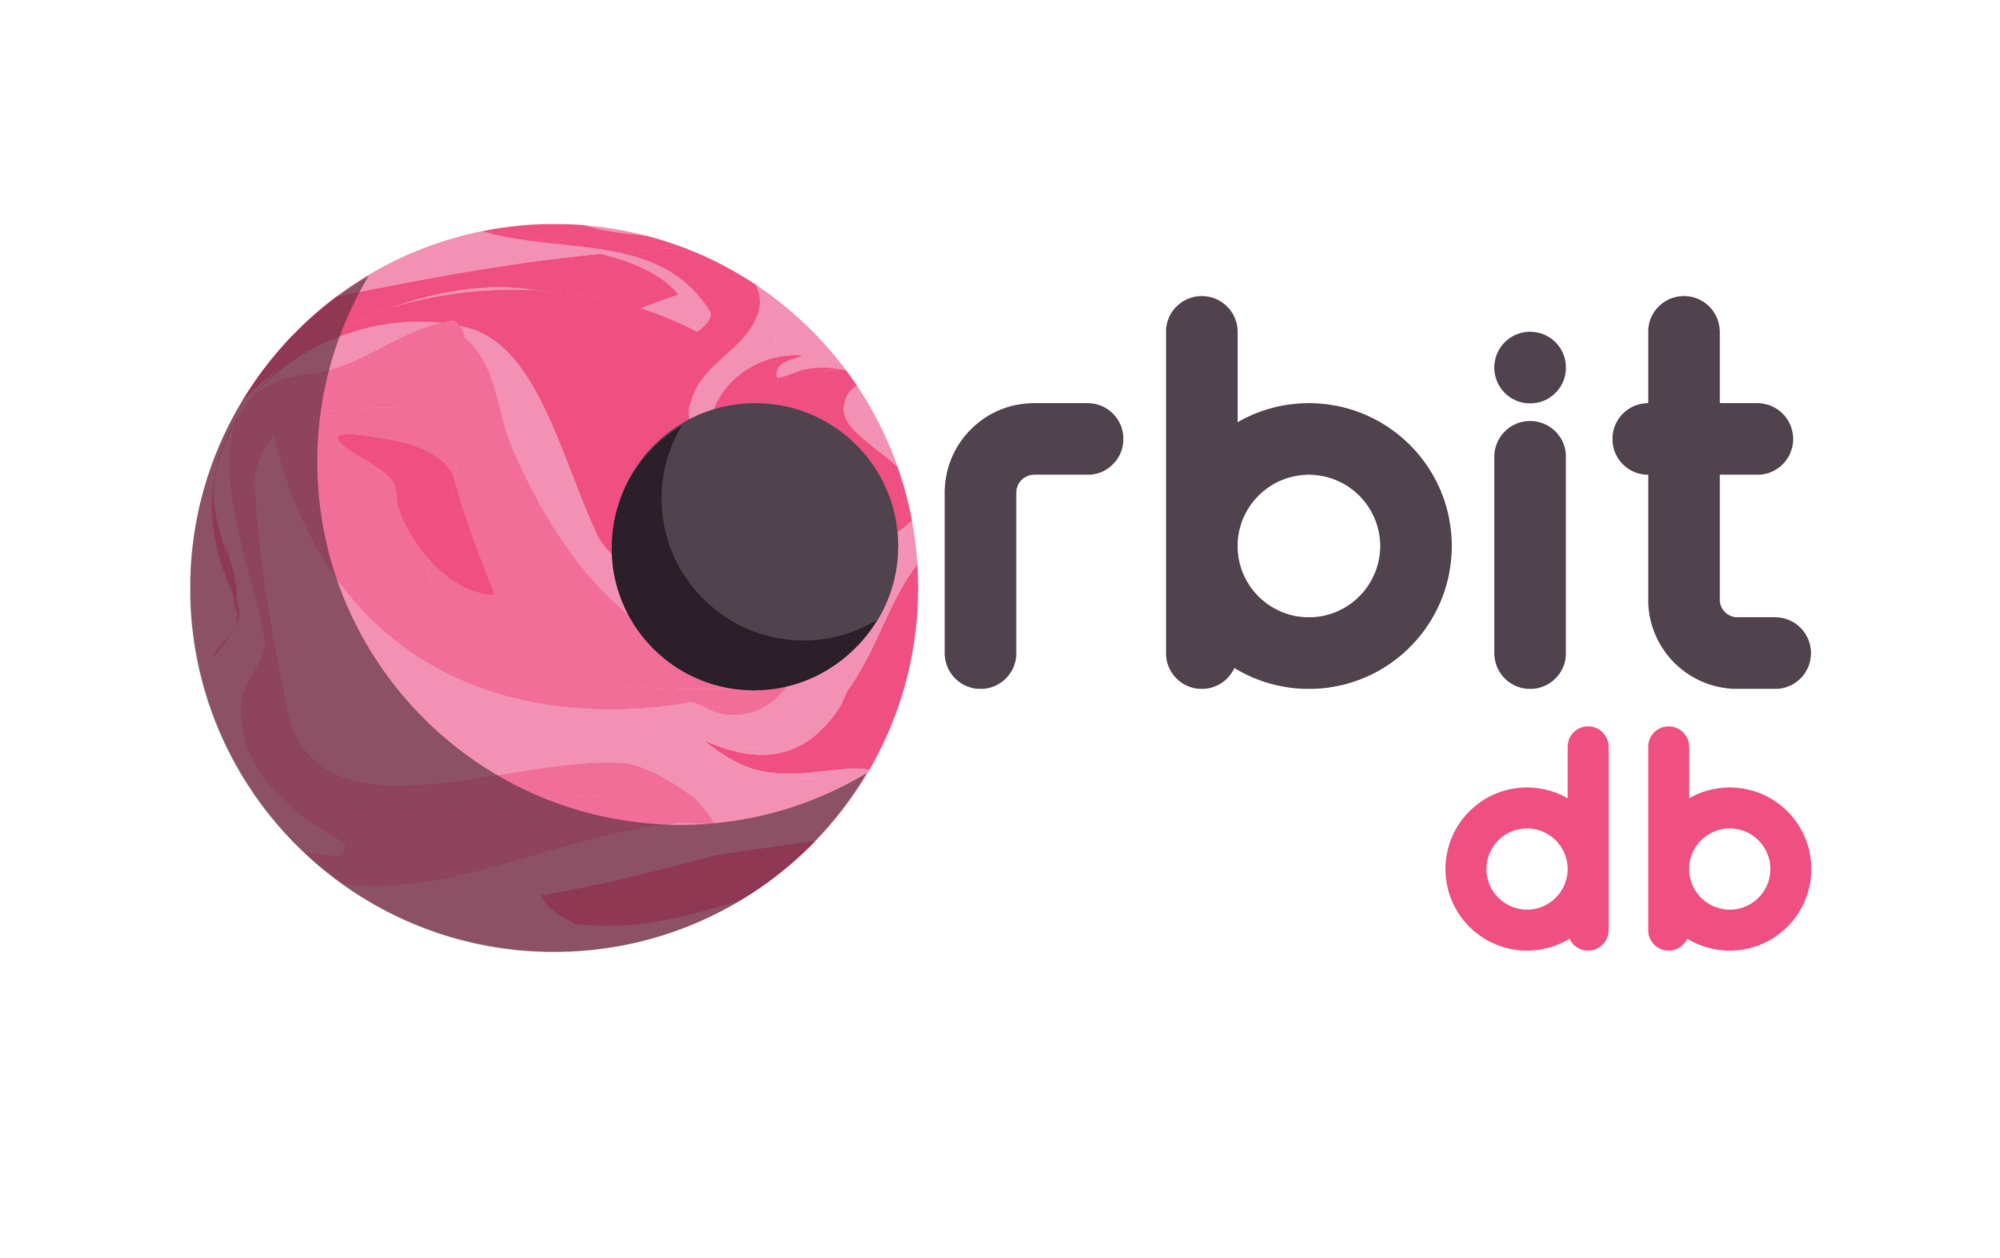 Welcome to OrbitDB